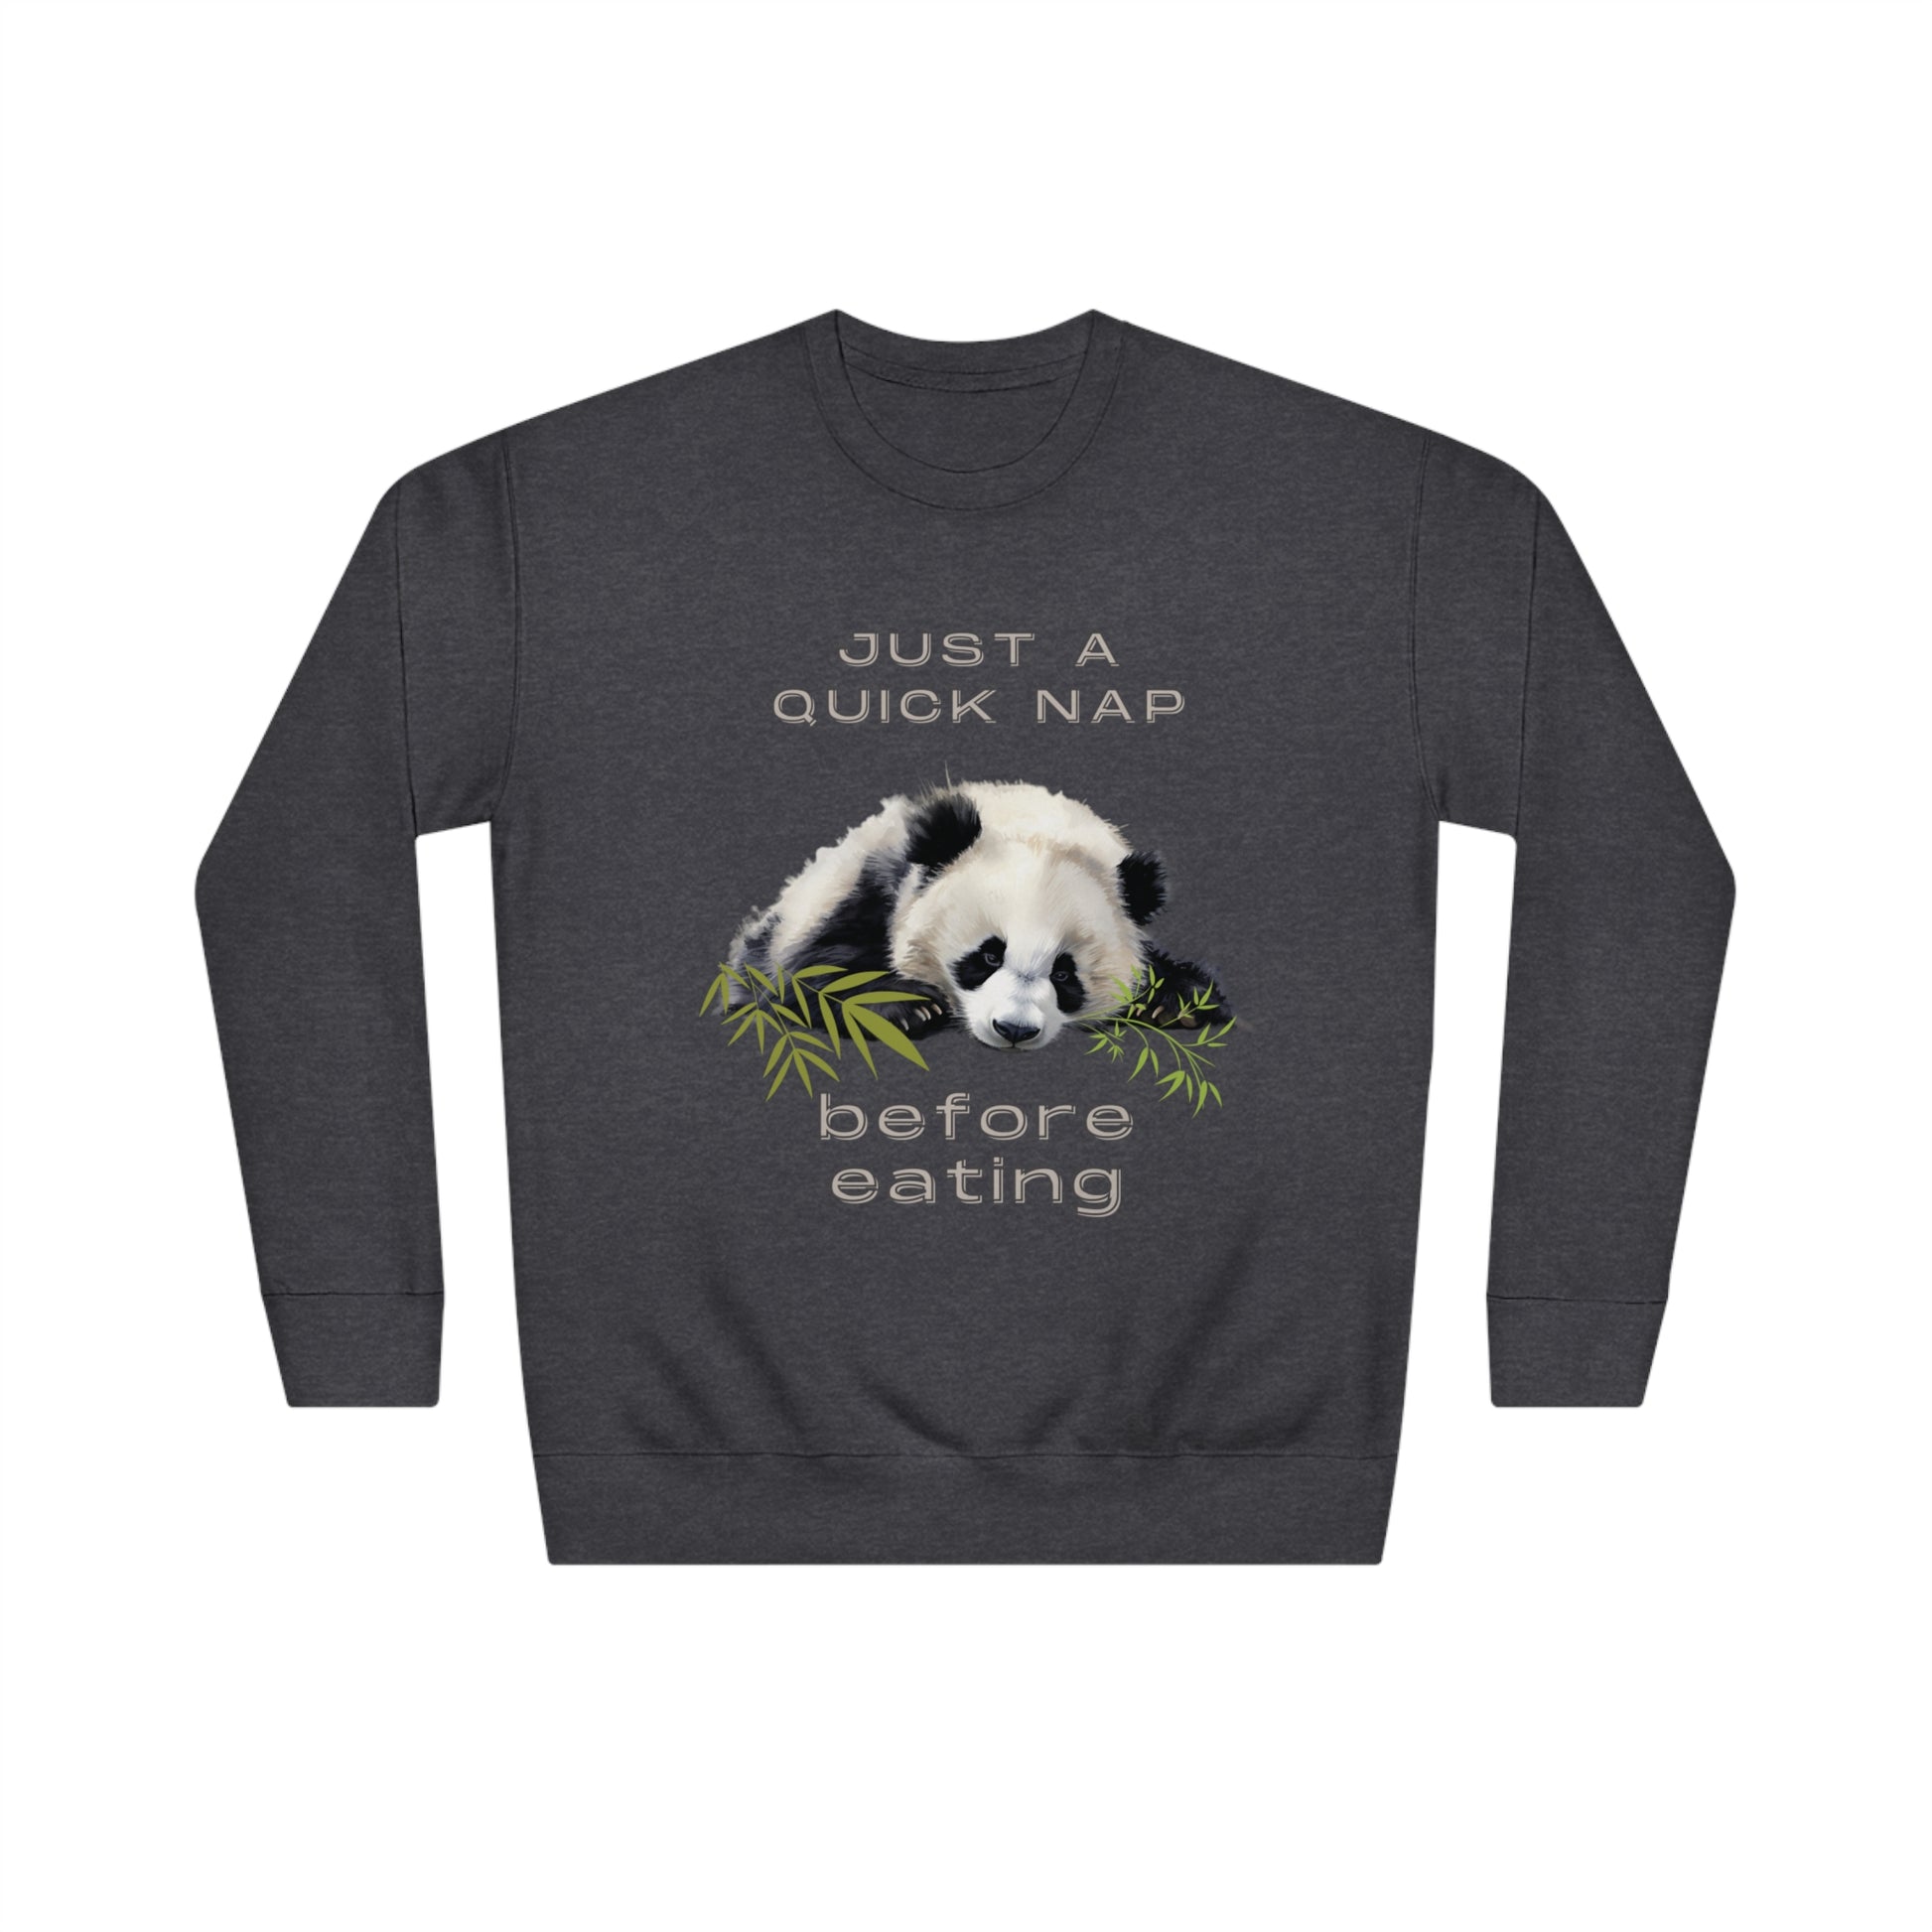 Just a Quick Nap Before Eating Sweatshirt | Embrace Cozy Relaxation | Funny Panda Sweatshirt Sweatshirt Charcoal Heather S 